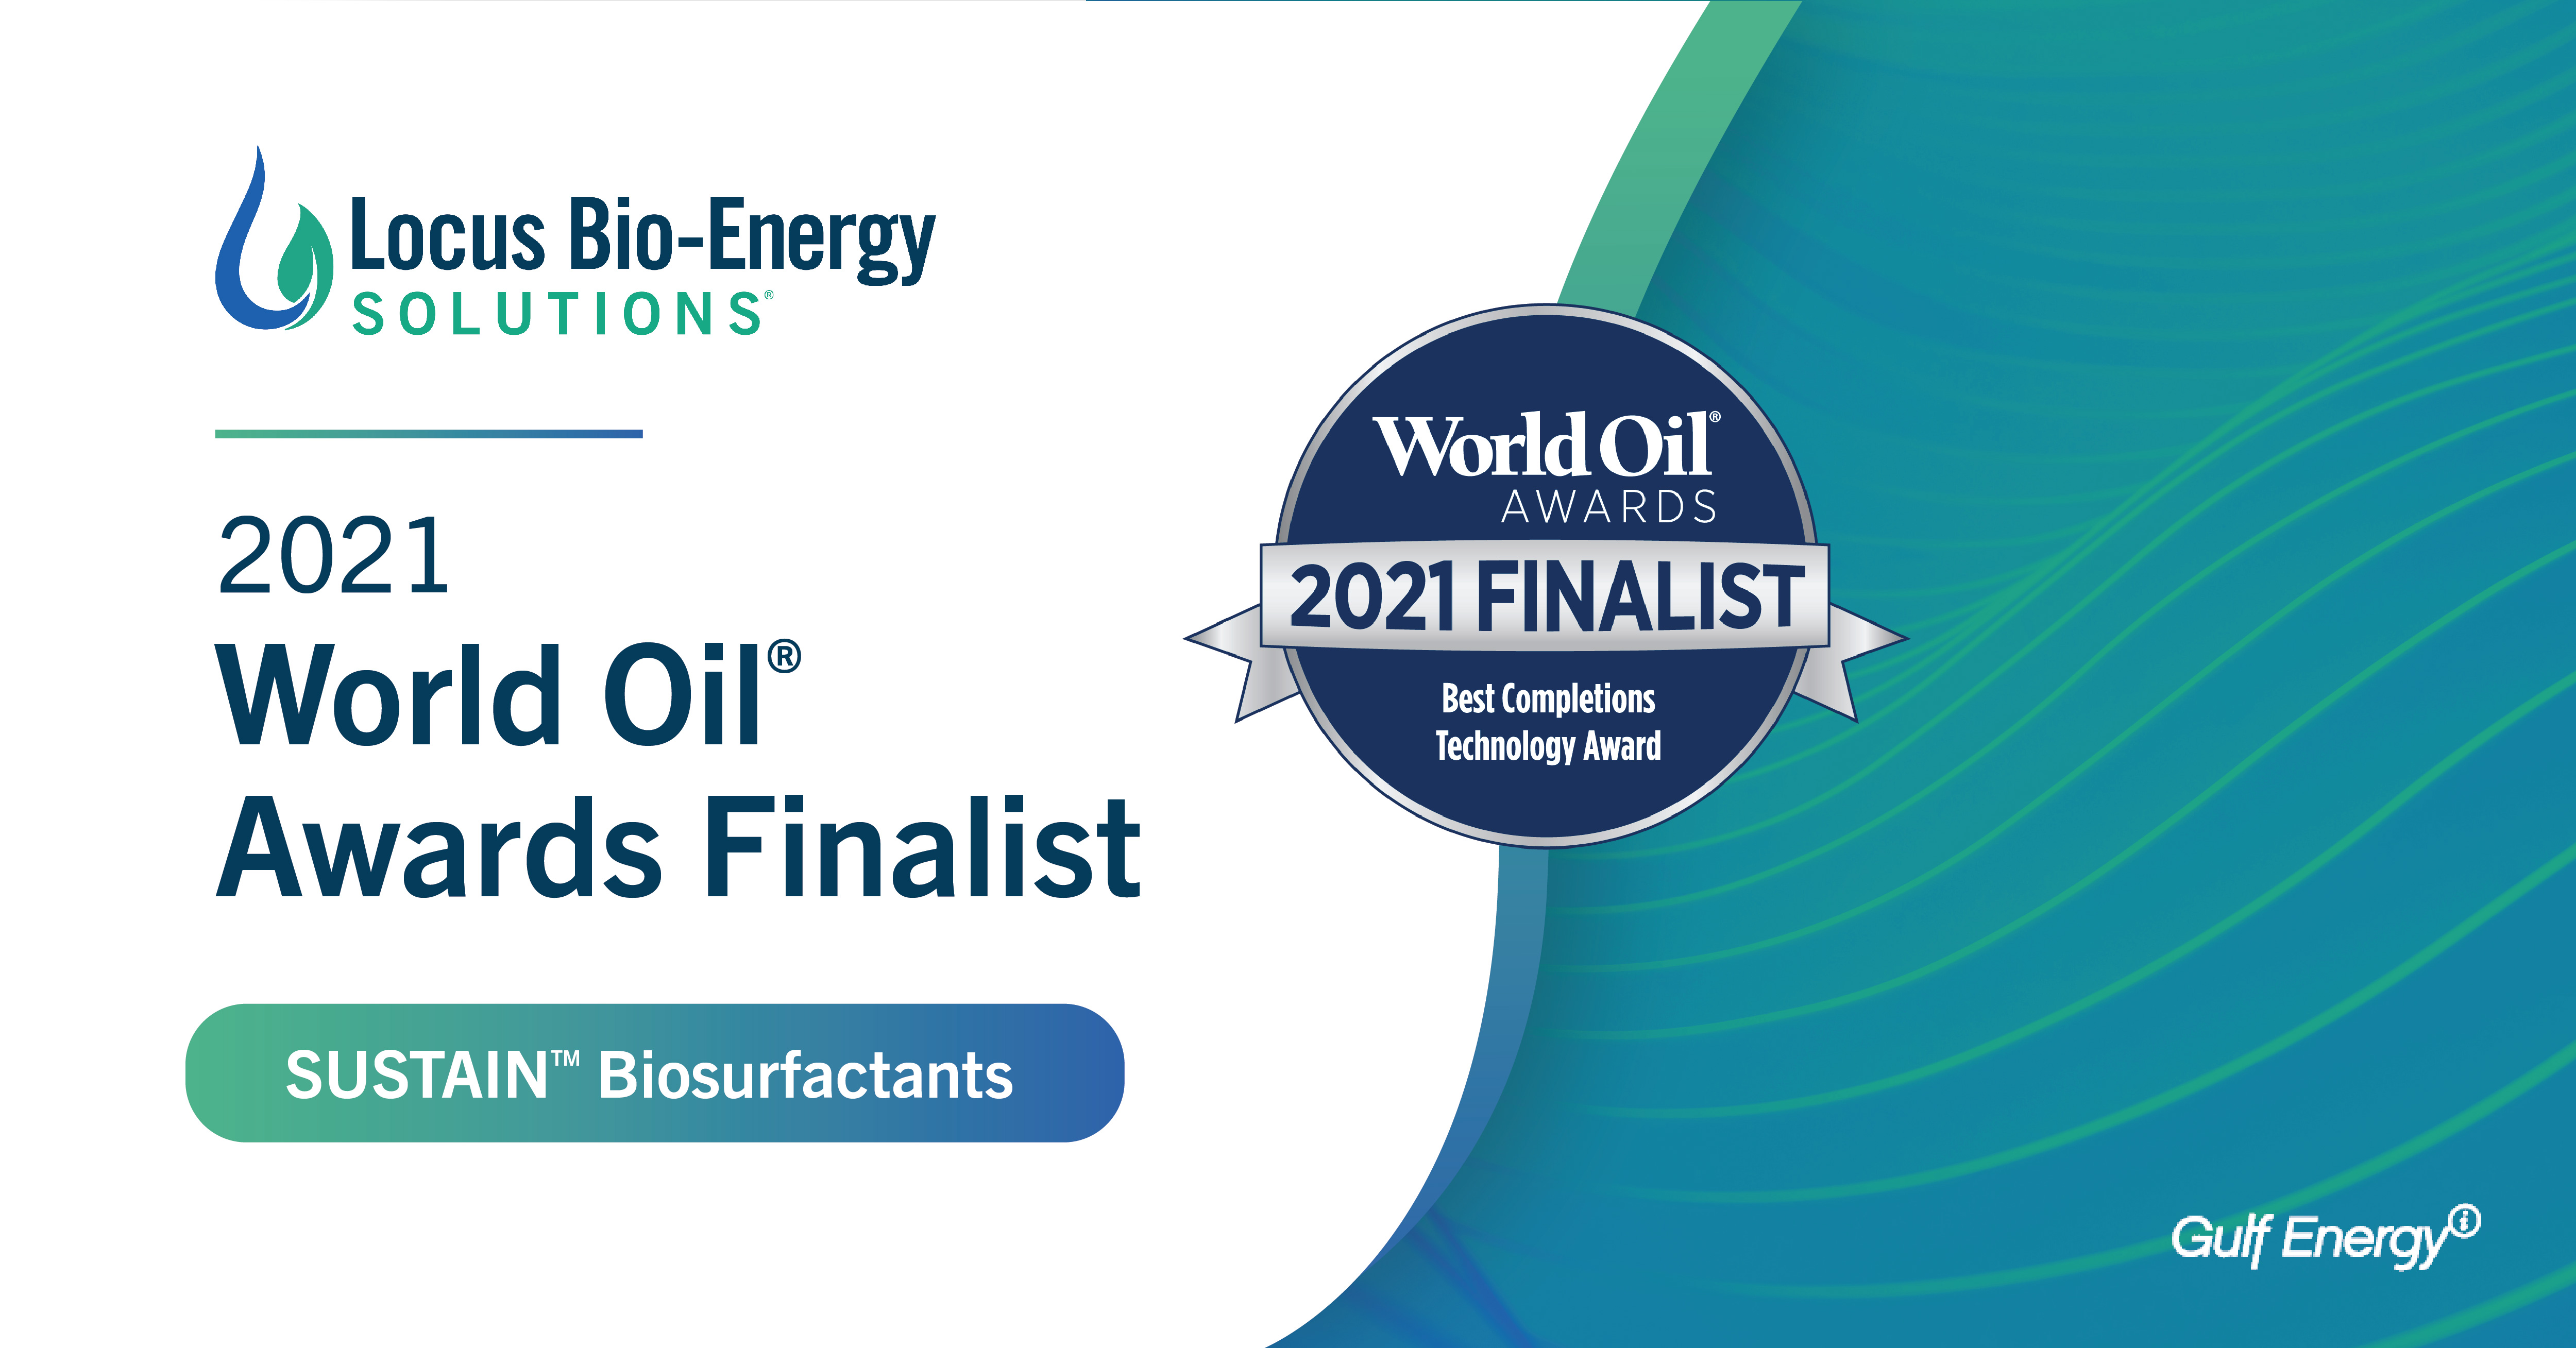 SUSTAIN Biosurfactants Named Best Completion Technology Finalist for World Oil Awards 2021